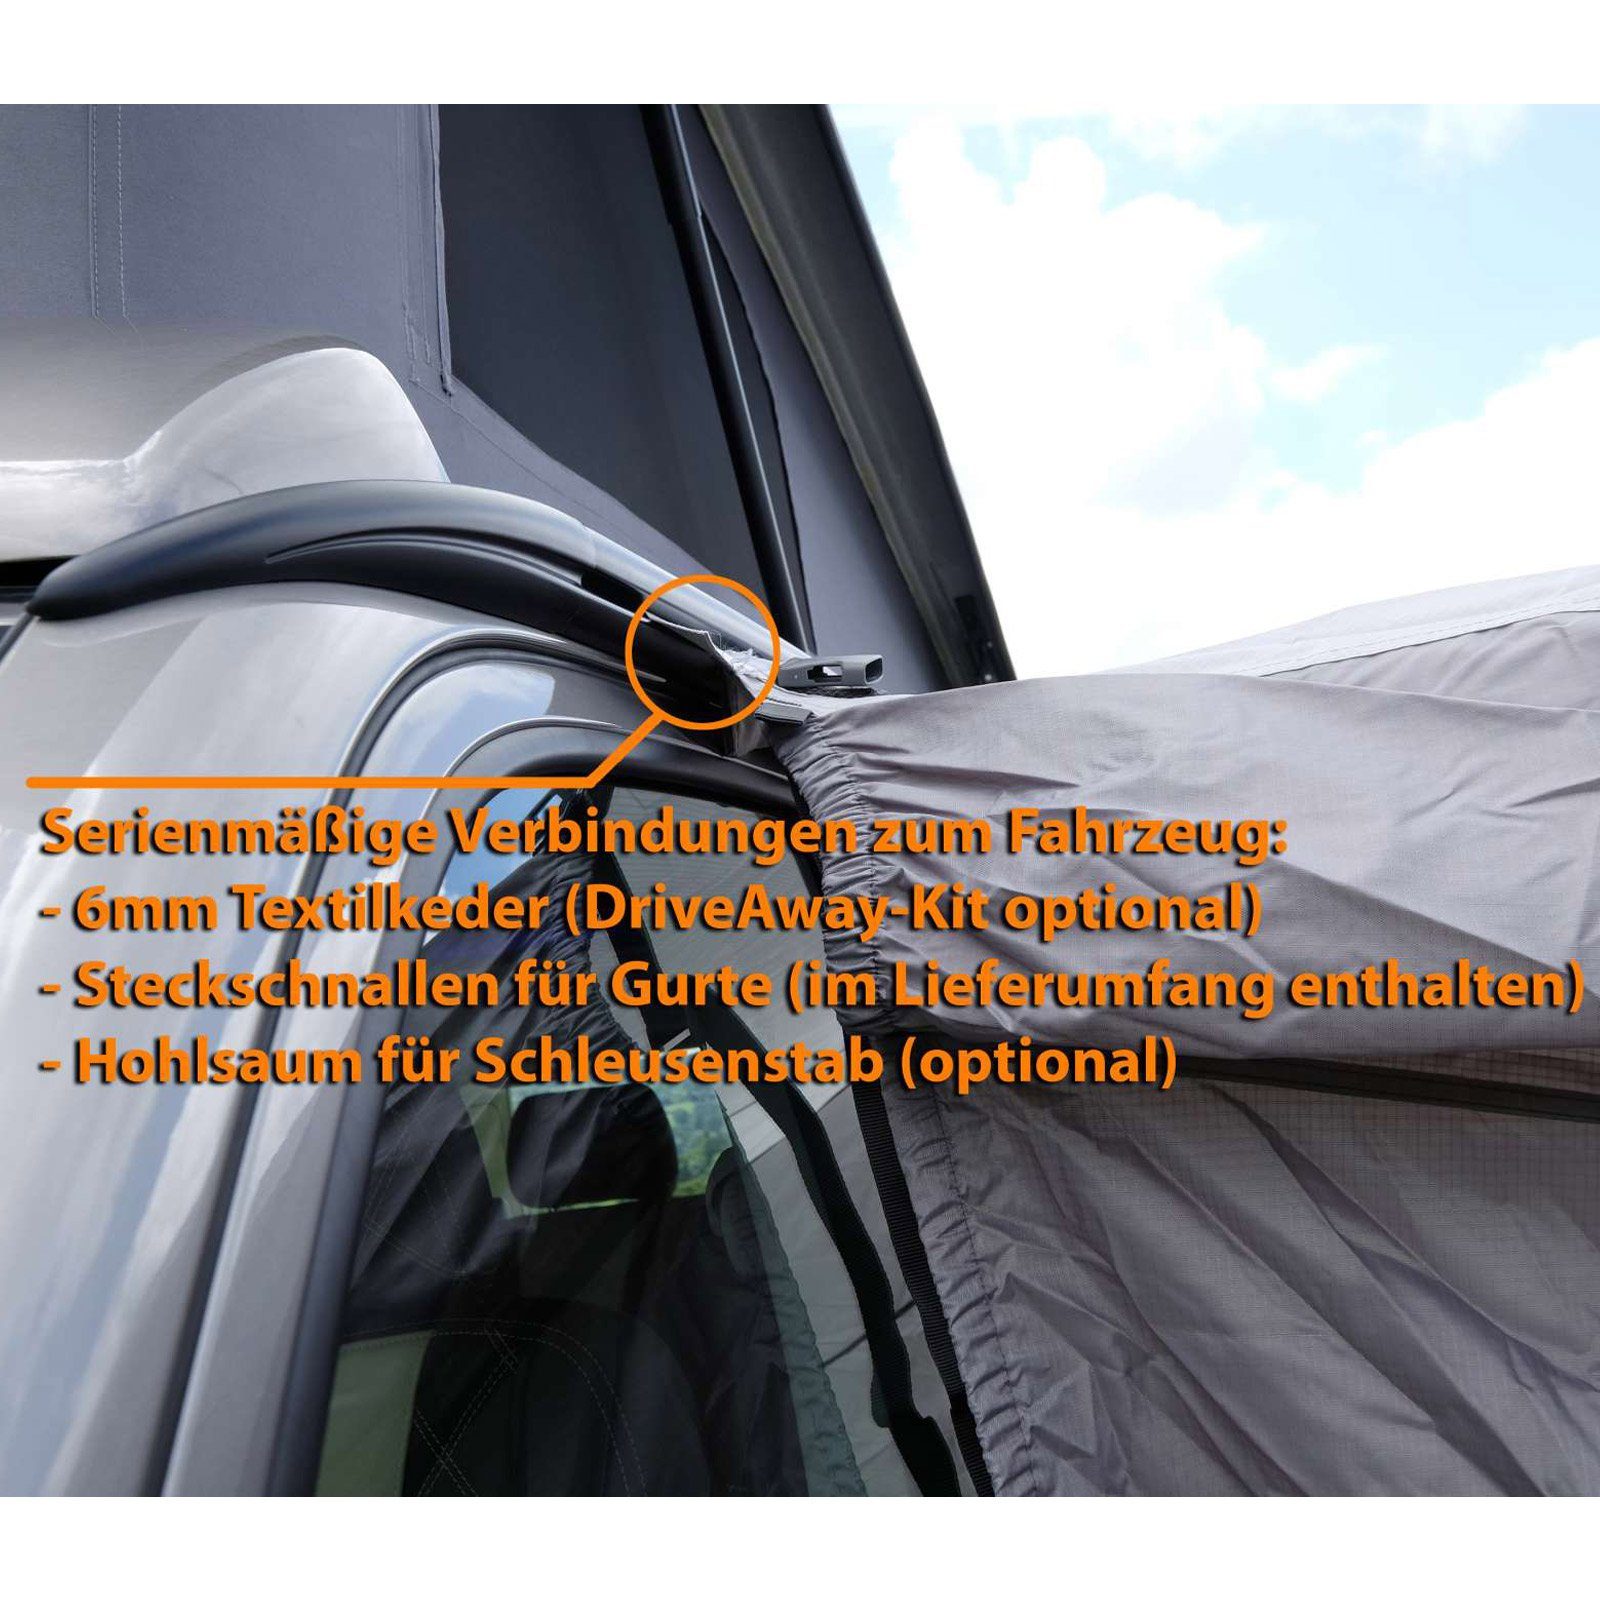 II Van Zelt Low VW Zelt Aufblasbar aufblasbares Airbeam, Hexaway Zelt Vor Luft Bus SUV Airhub Vango